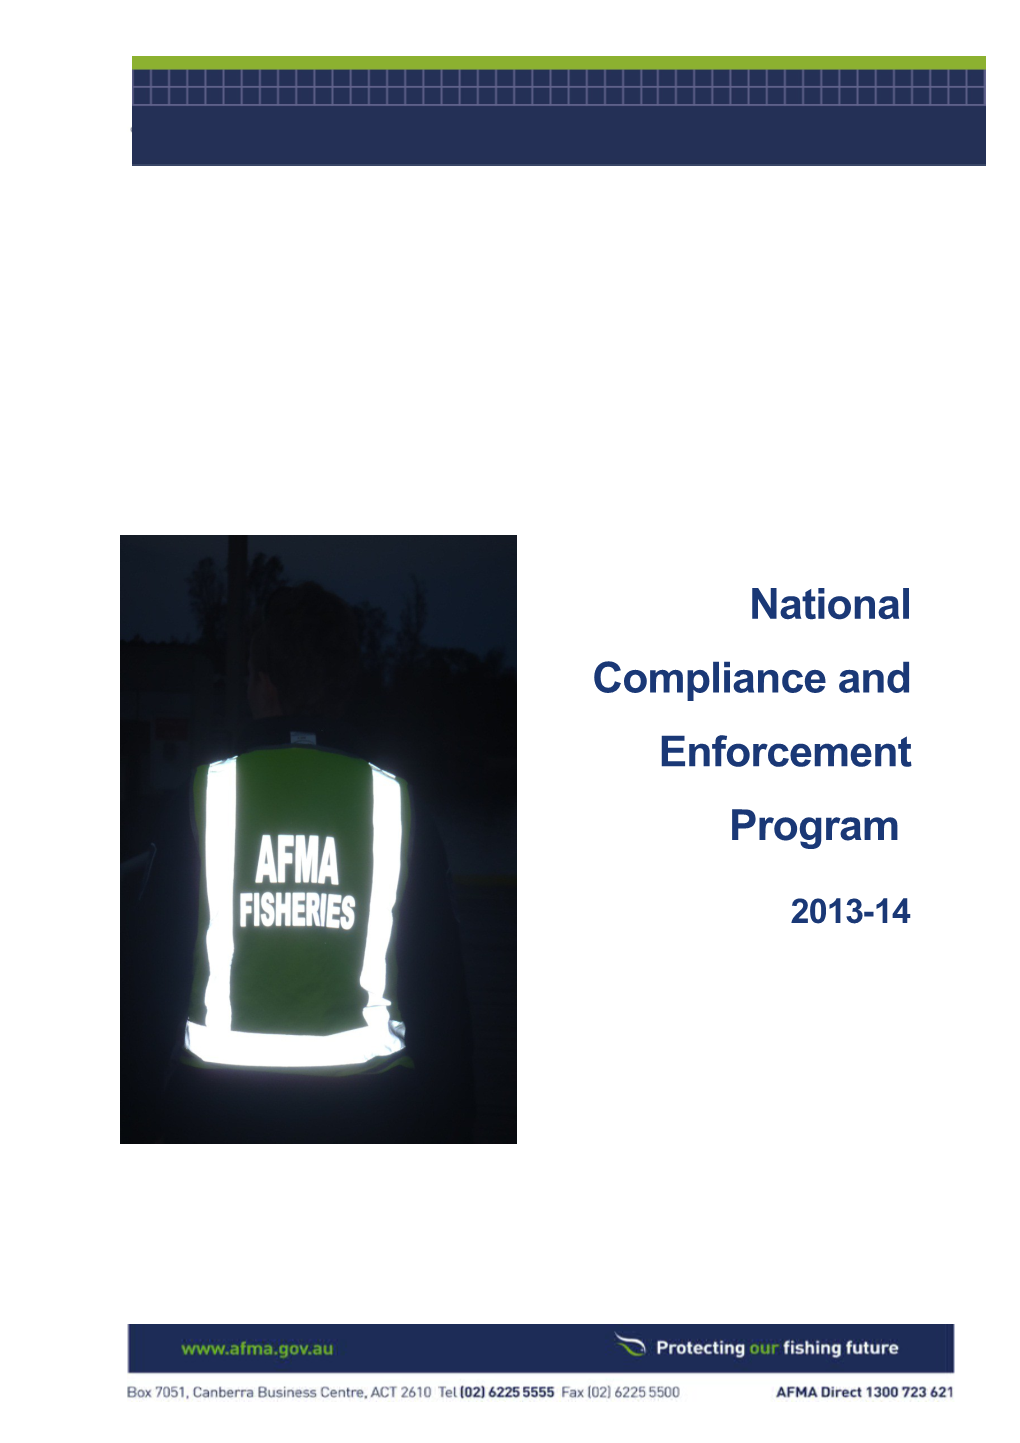 National Compliance and Enforcement Program